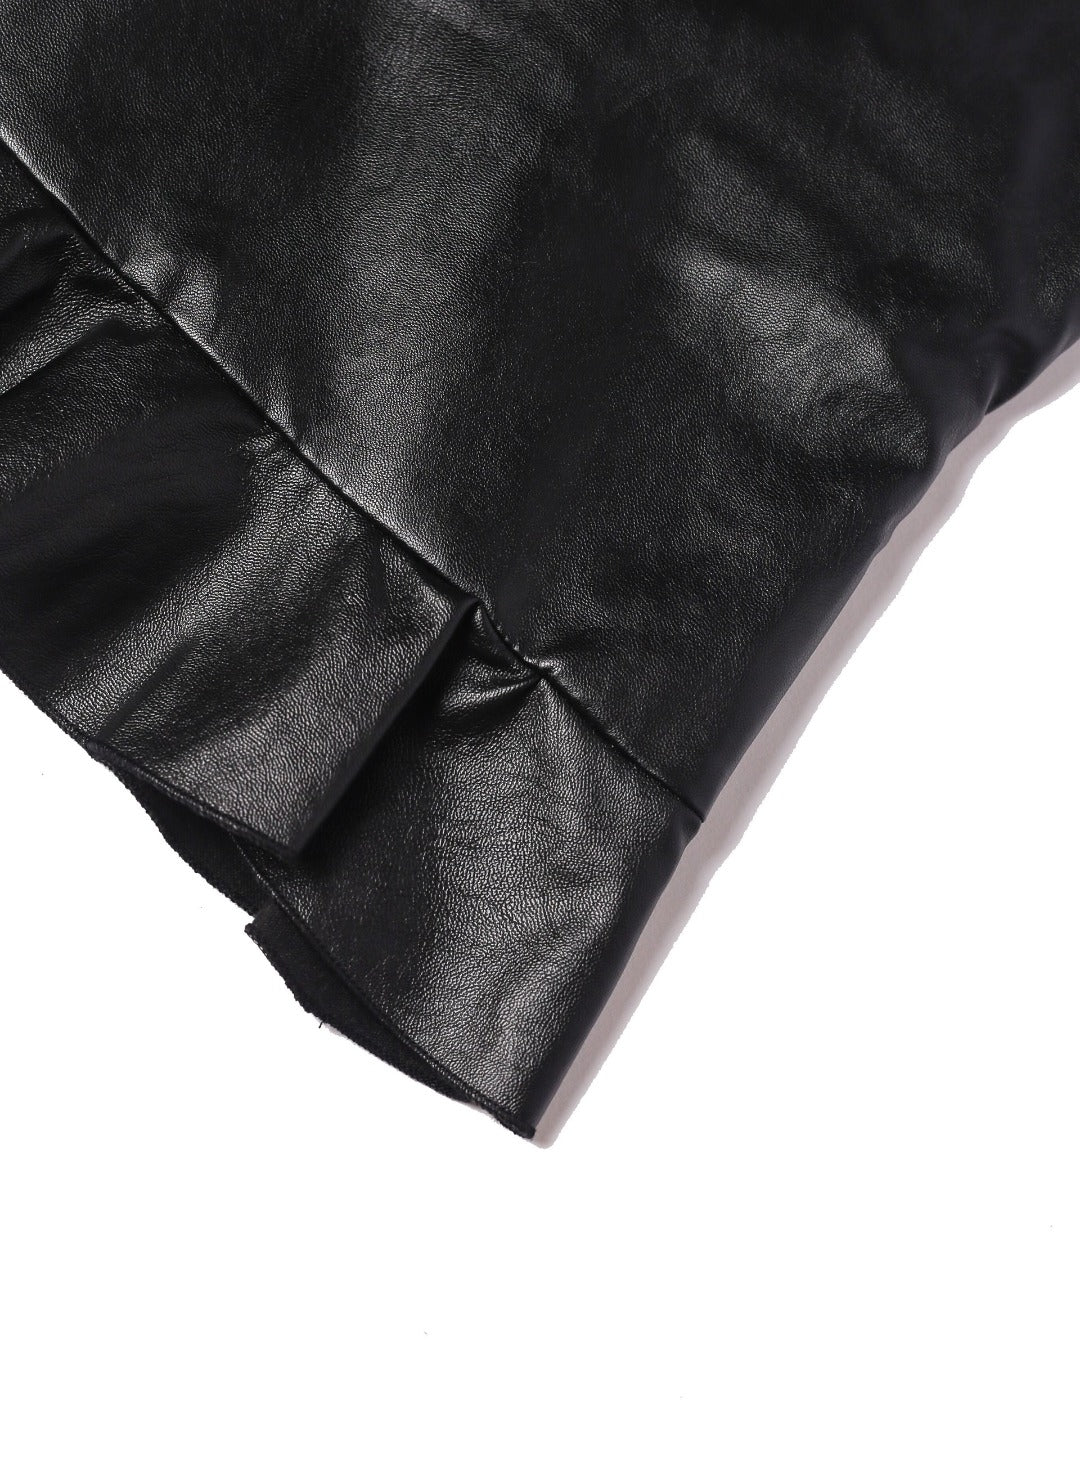 opaque black faux leather dress